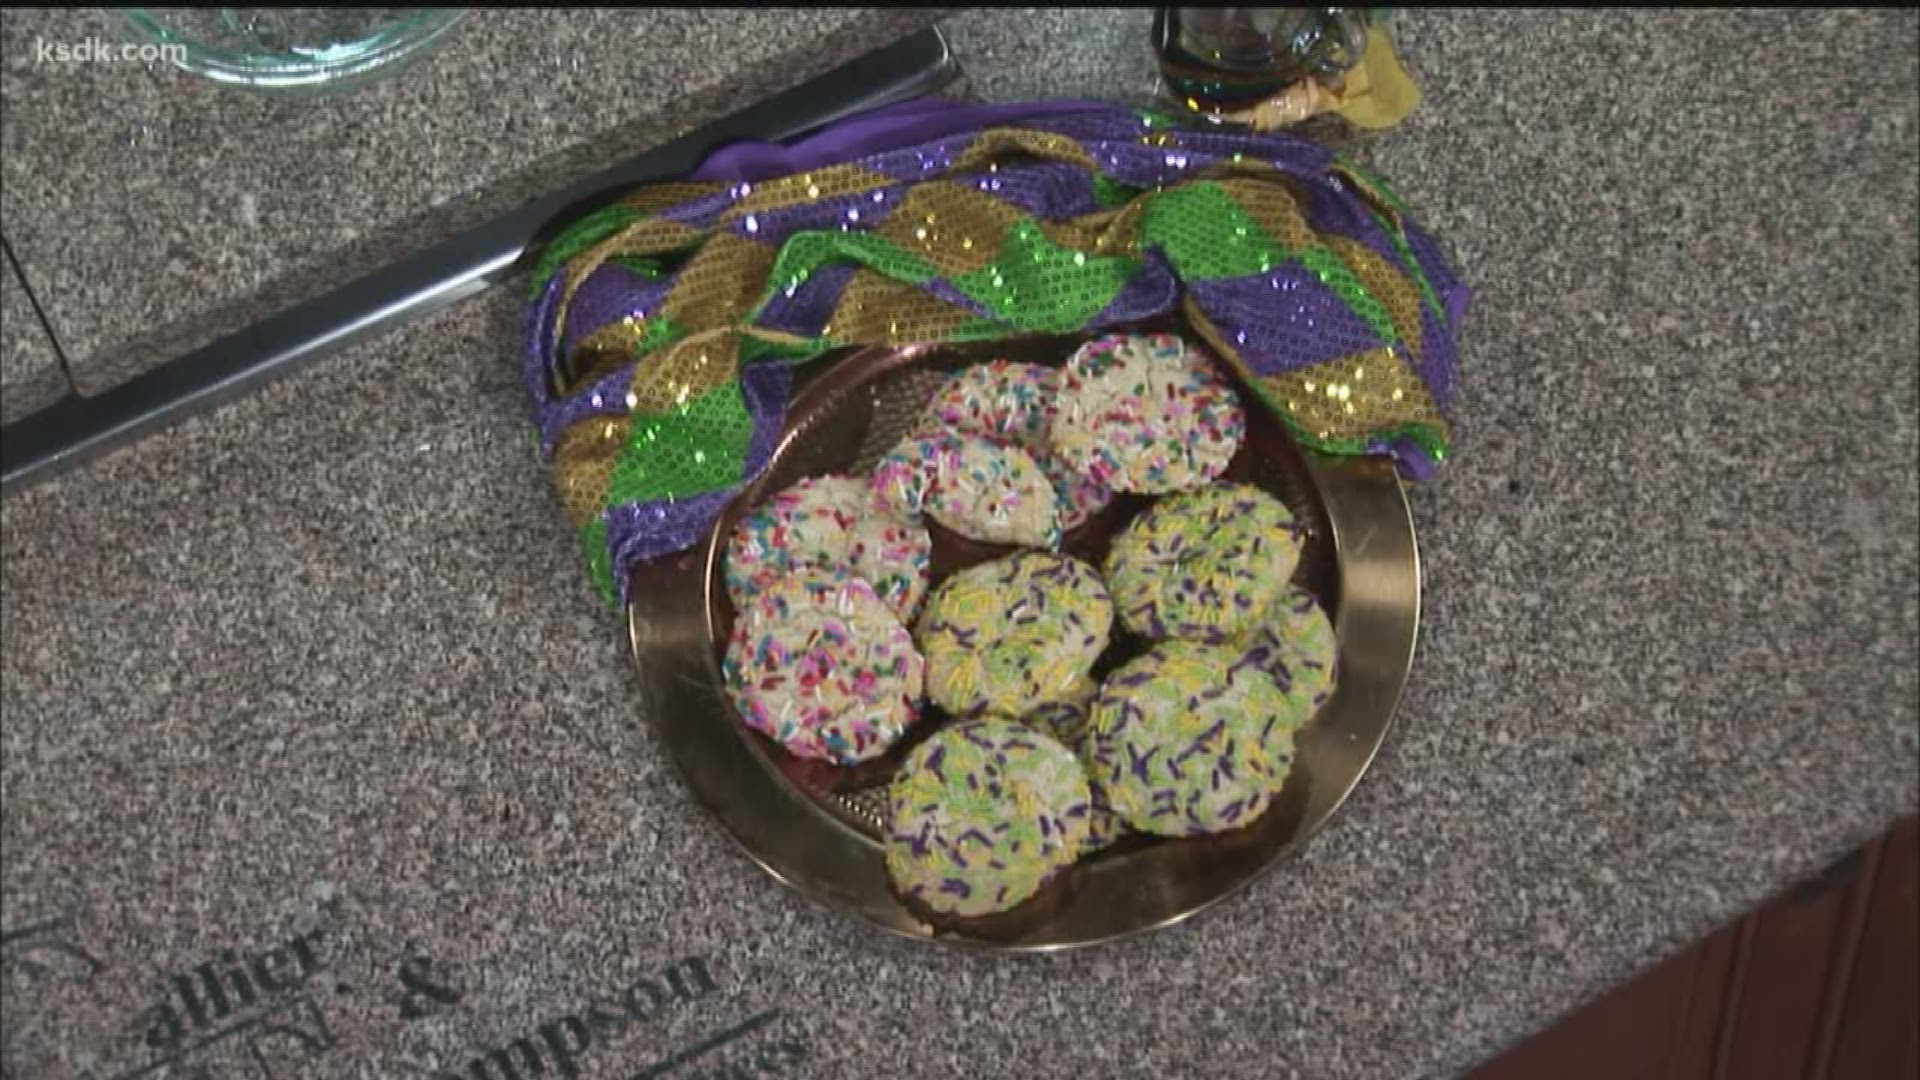 Sarita Gelner of Ritzy Mom blog shares a recipe in honor of Mardi Gras.